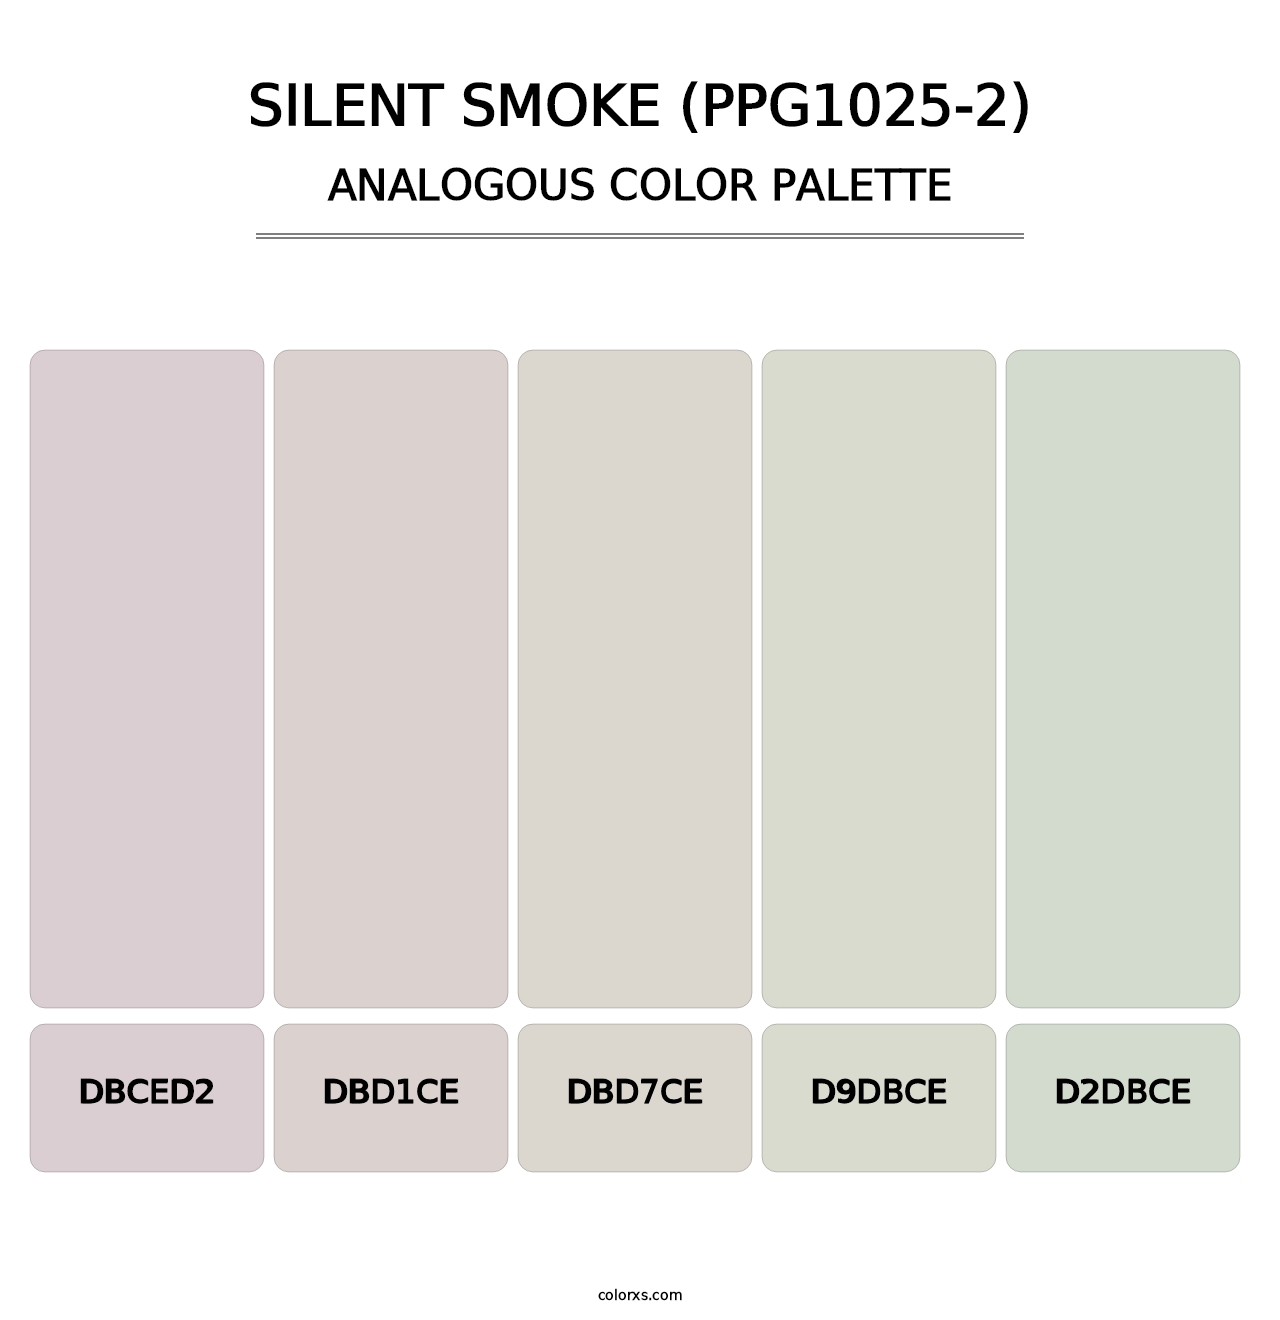 Silent Smoke (PPG1025-2) - Analogous Color Palette